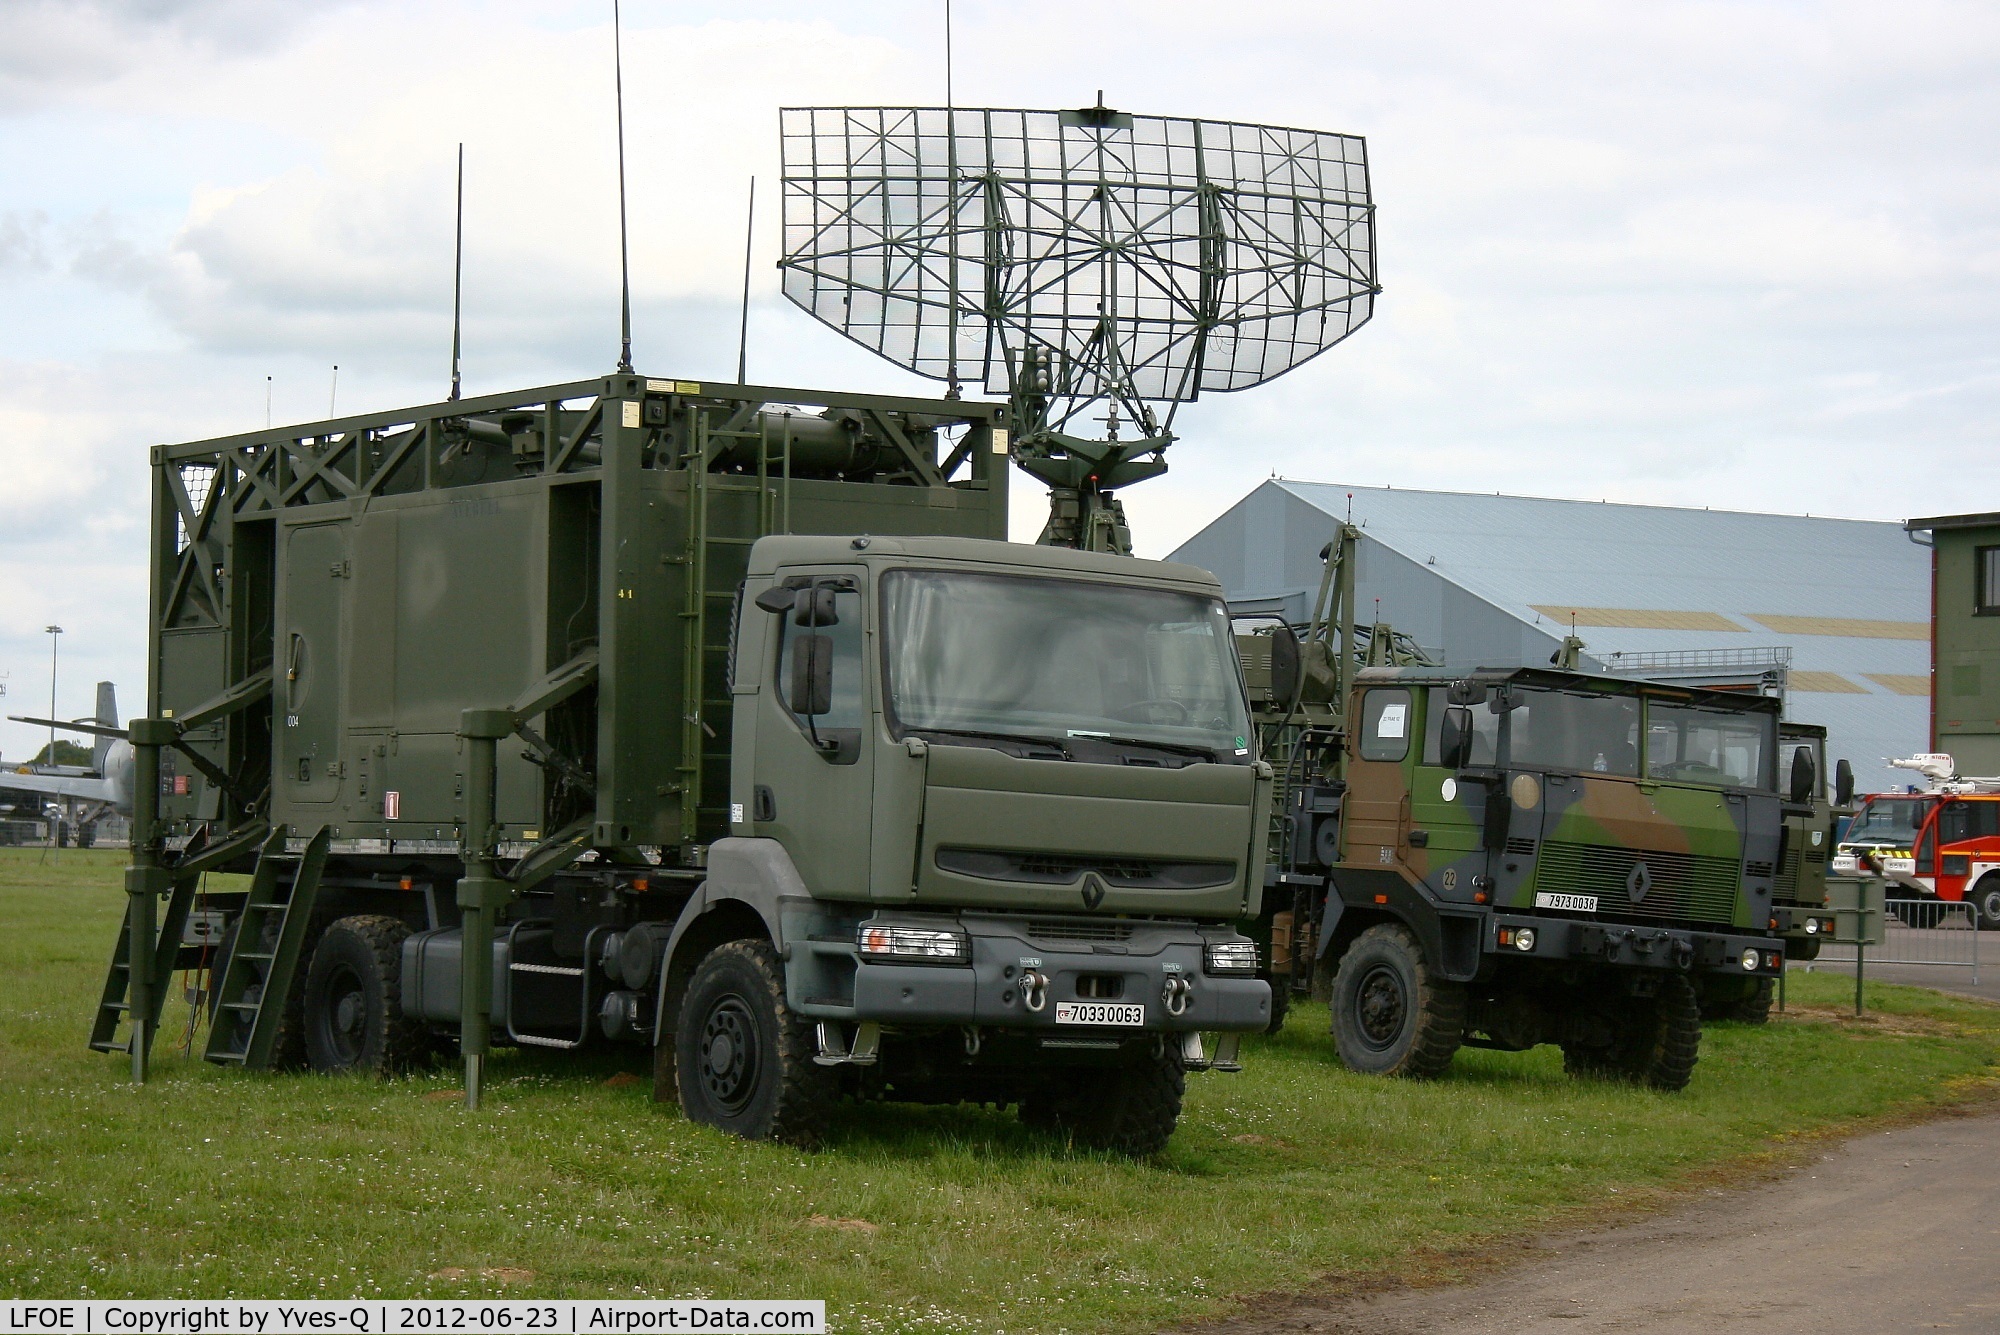 Evreux Fauville Airport, Evreux France (LFOE) - Military tactical surveillance radar Aladin ANGD, Evreux-Fauville Air Base (LFOE)